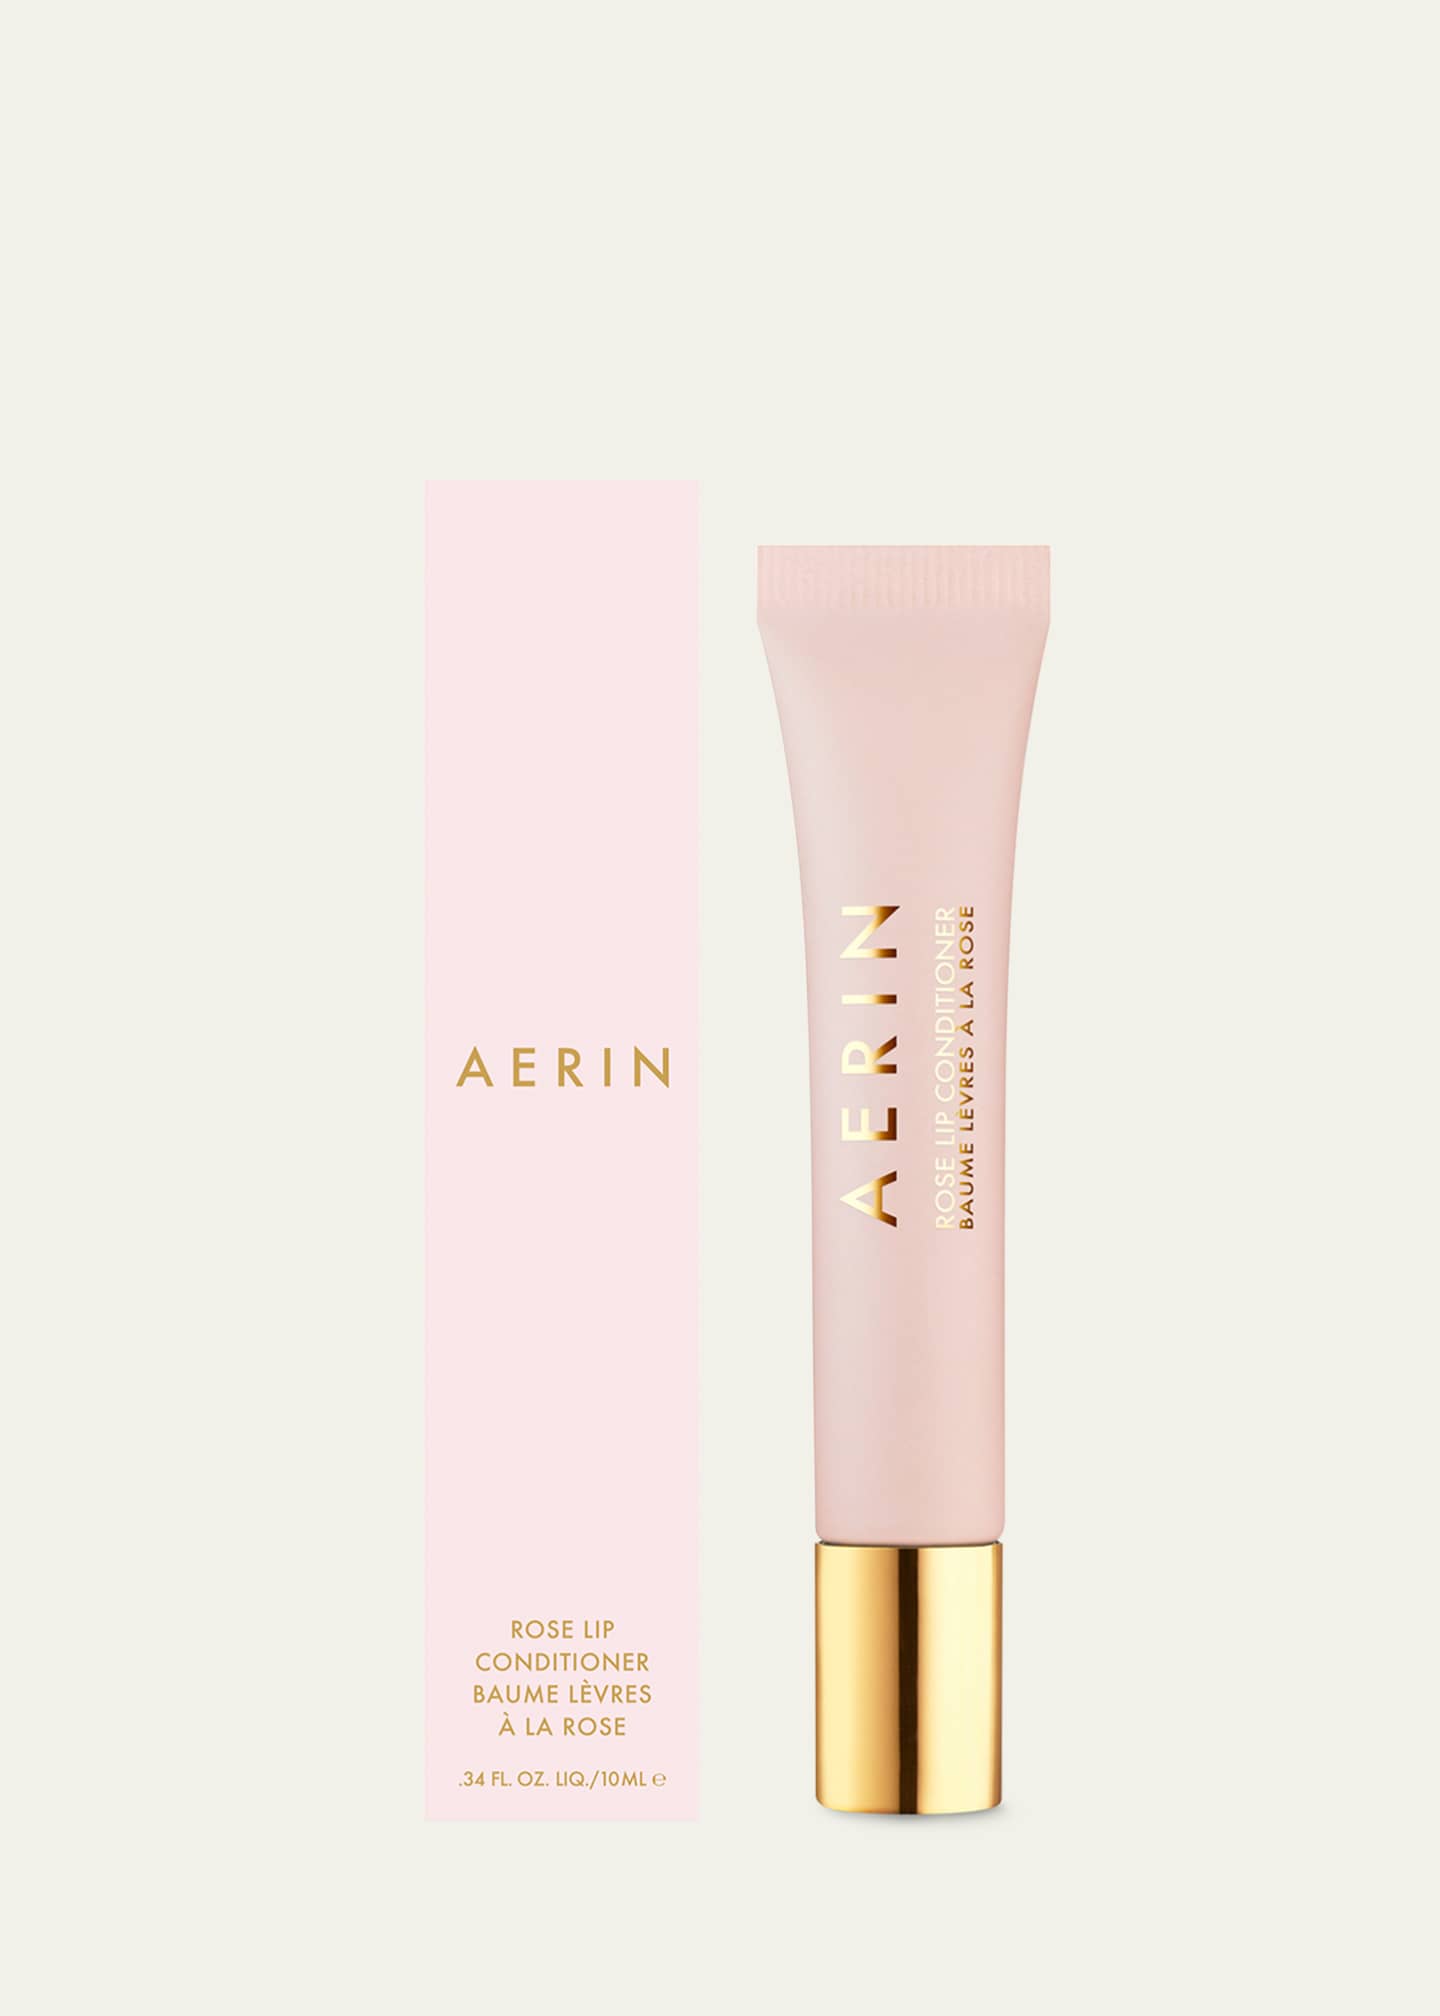 AERIN AERIN Rose Lip Conditioner Beauty Essential, 0.34 oz. Image 2 of 2